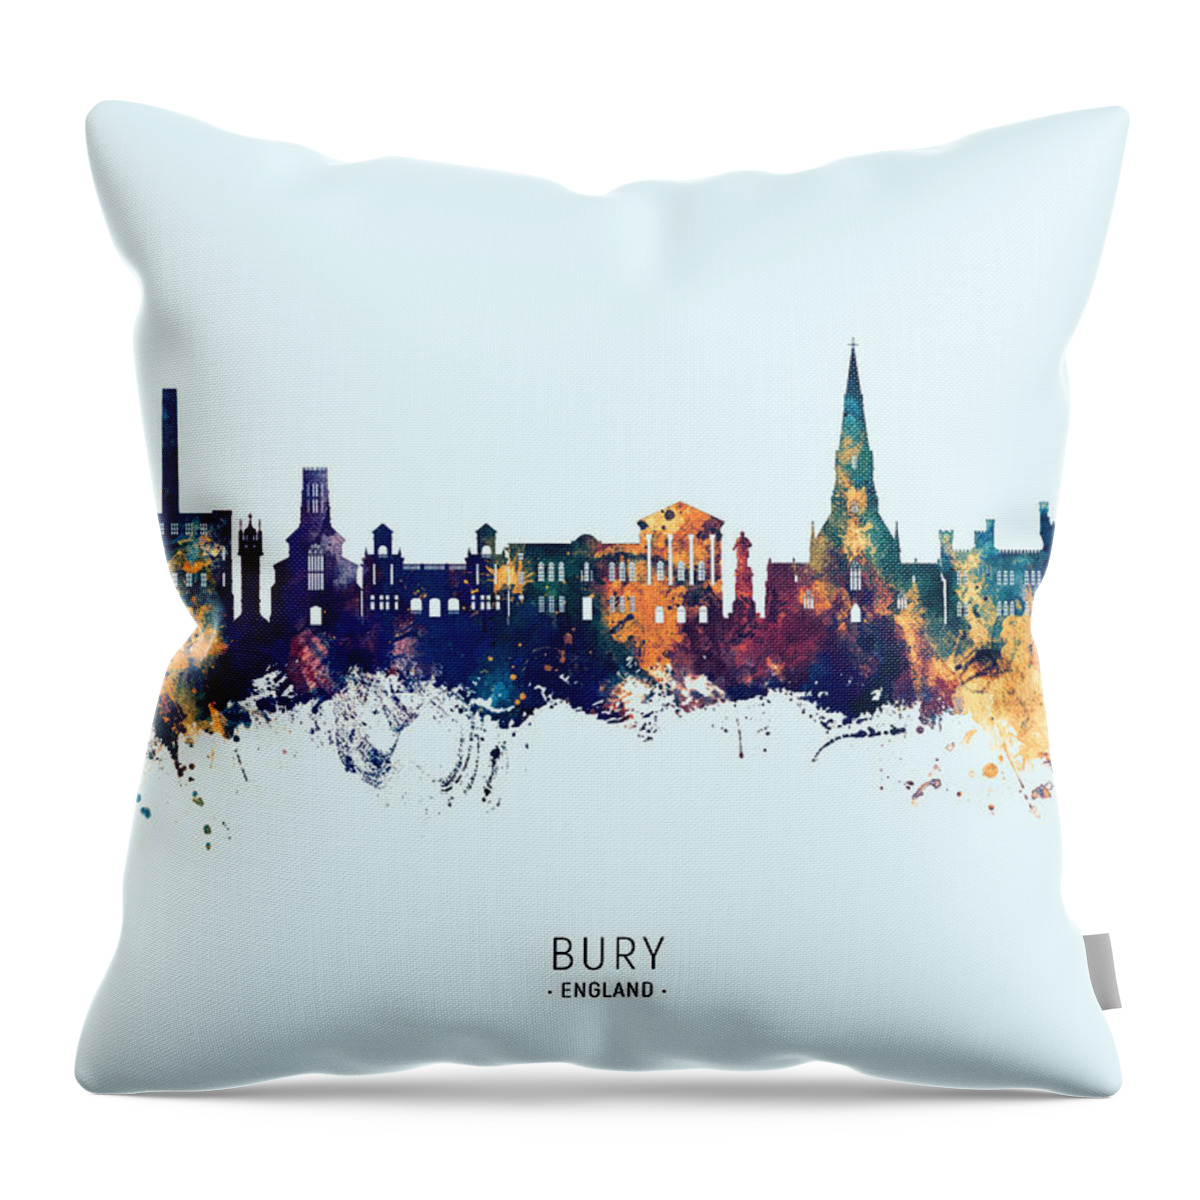 Bury Throw Pillow featuring the digital art Bury England Skyline #36 by Michael Tompsett